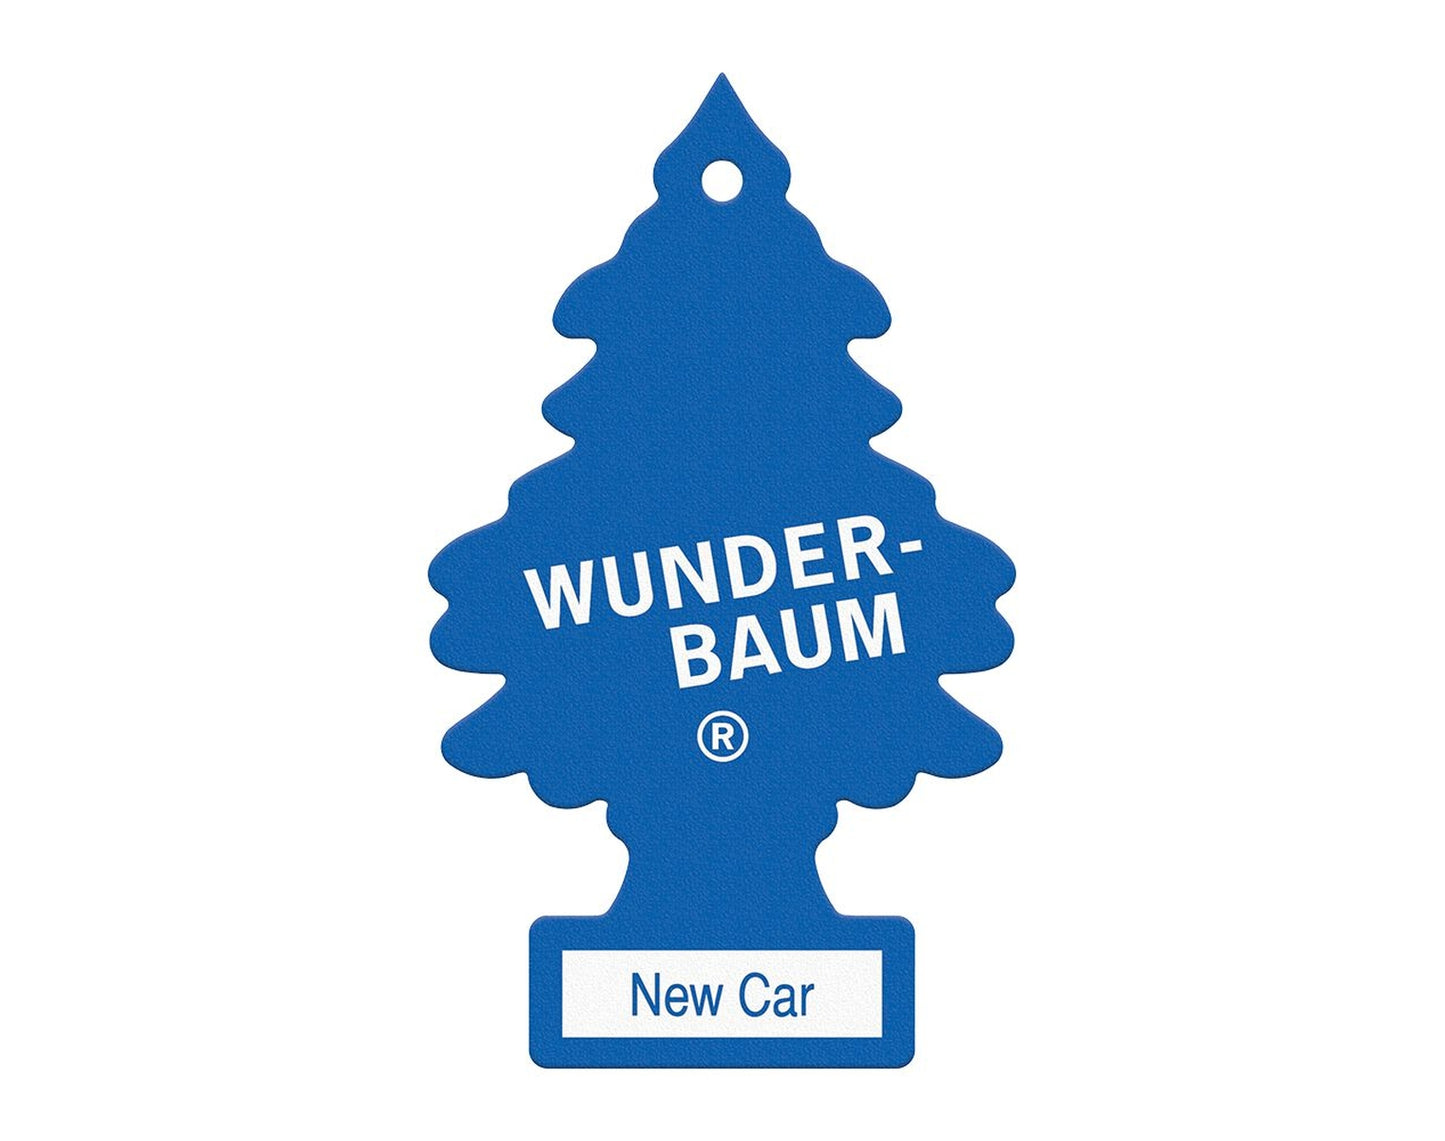 WUNDER-BAUM New Car